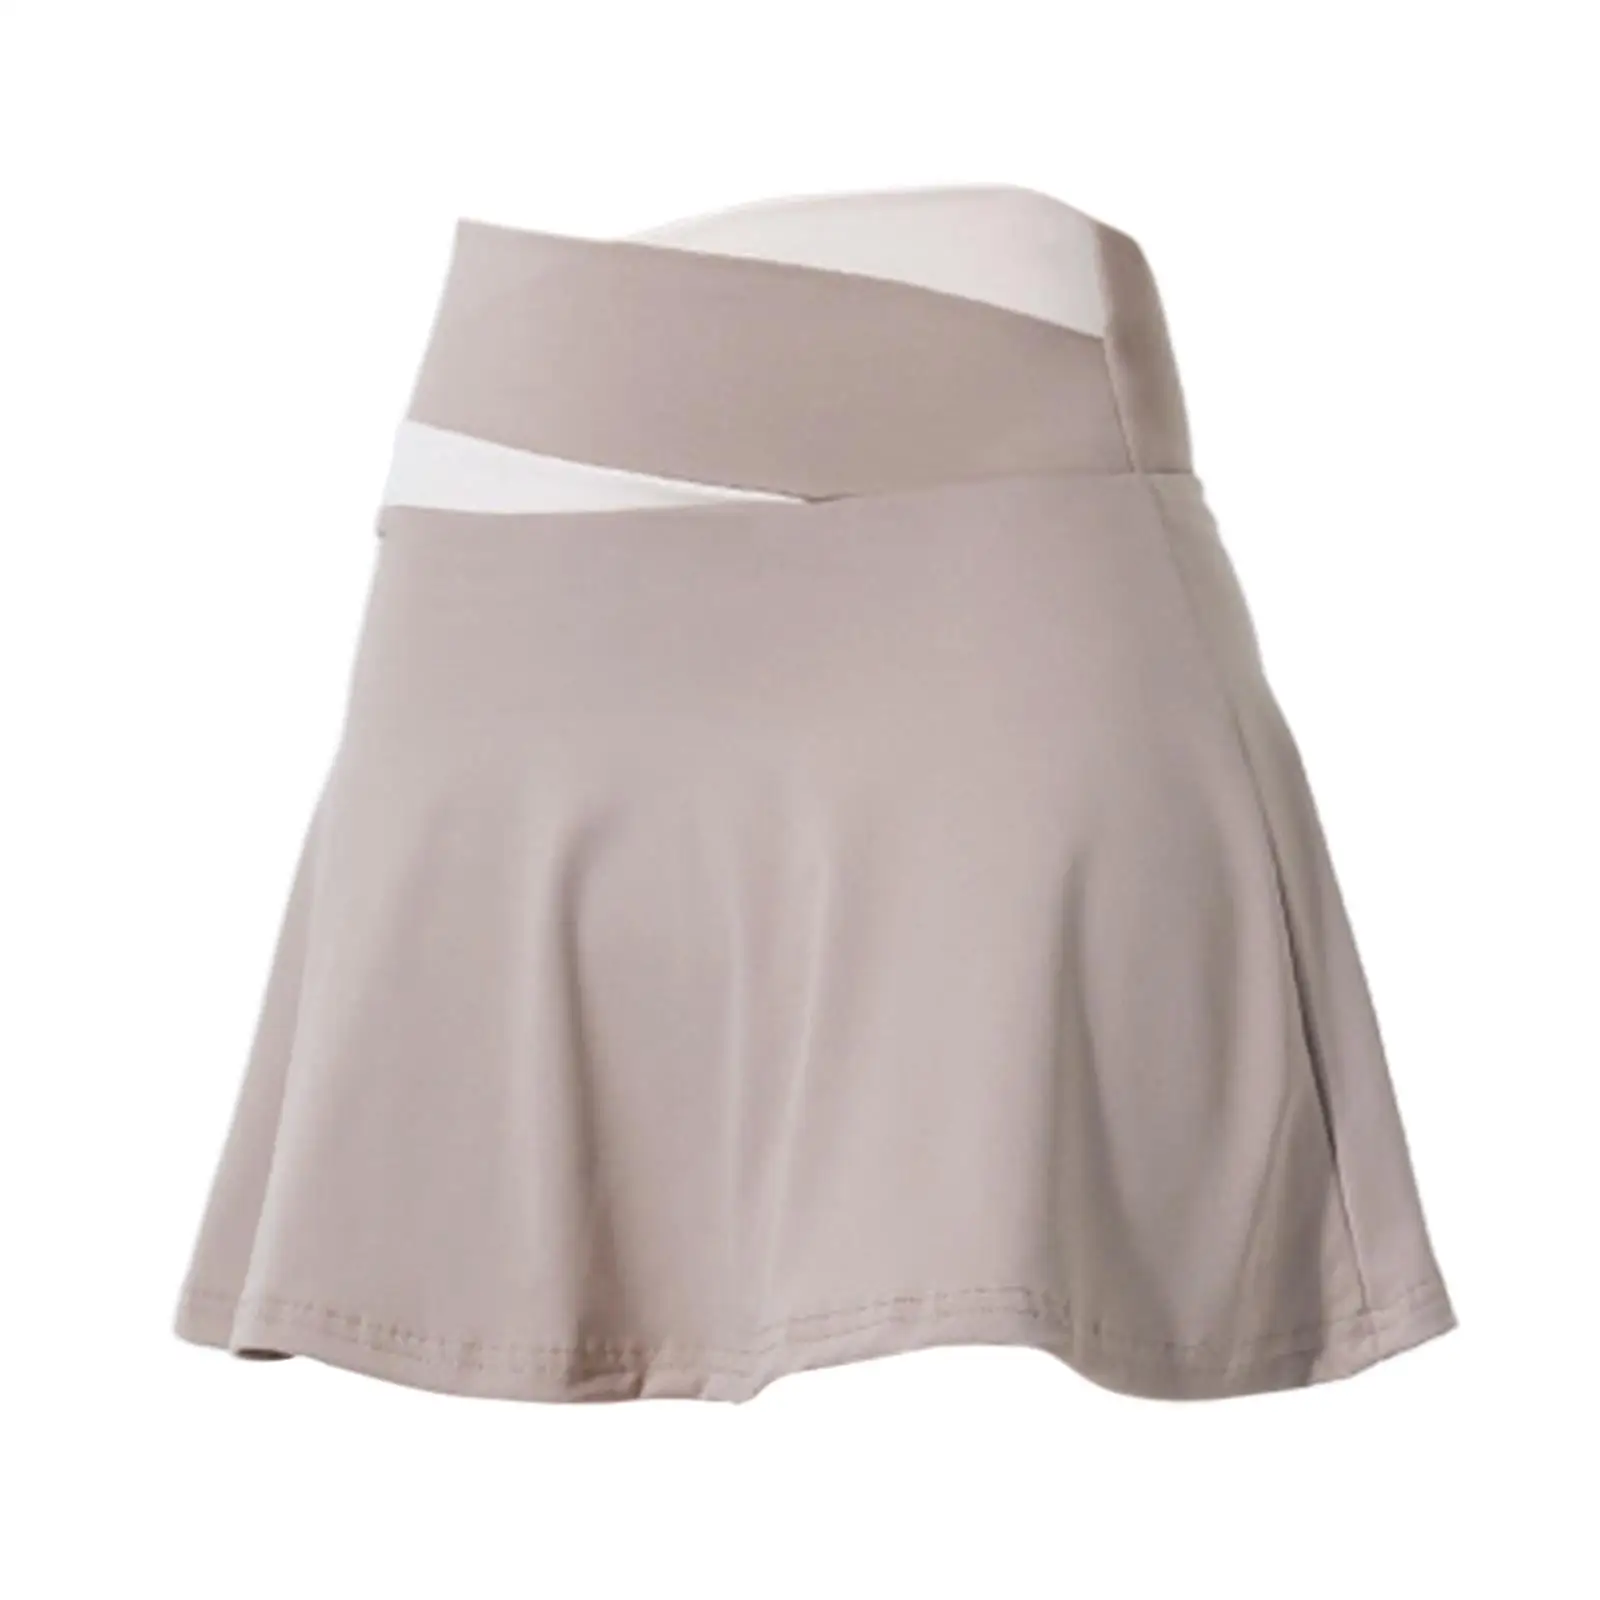 Tennis Skirt Short Skirt Tracksuit Gymwear Ladies Soft Women`s Culottes Skirt Golf Skorts for Fitness Workout Sports Gym